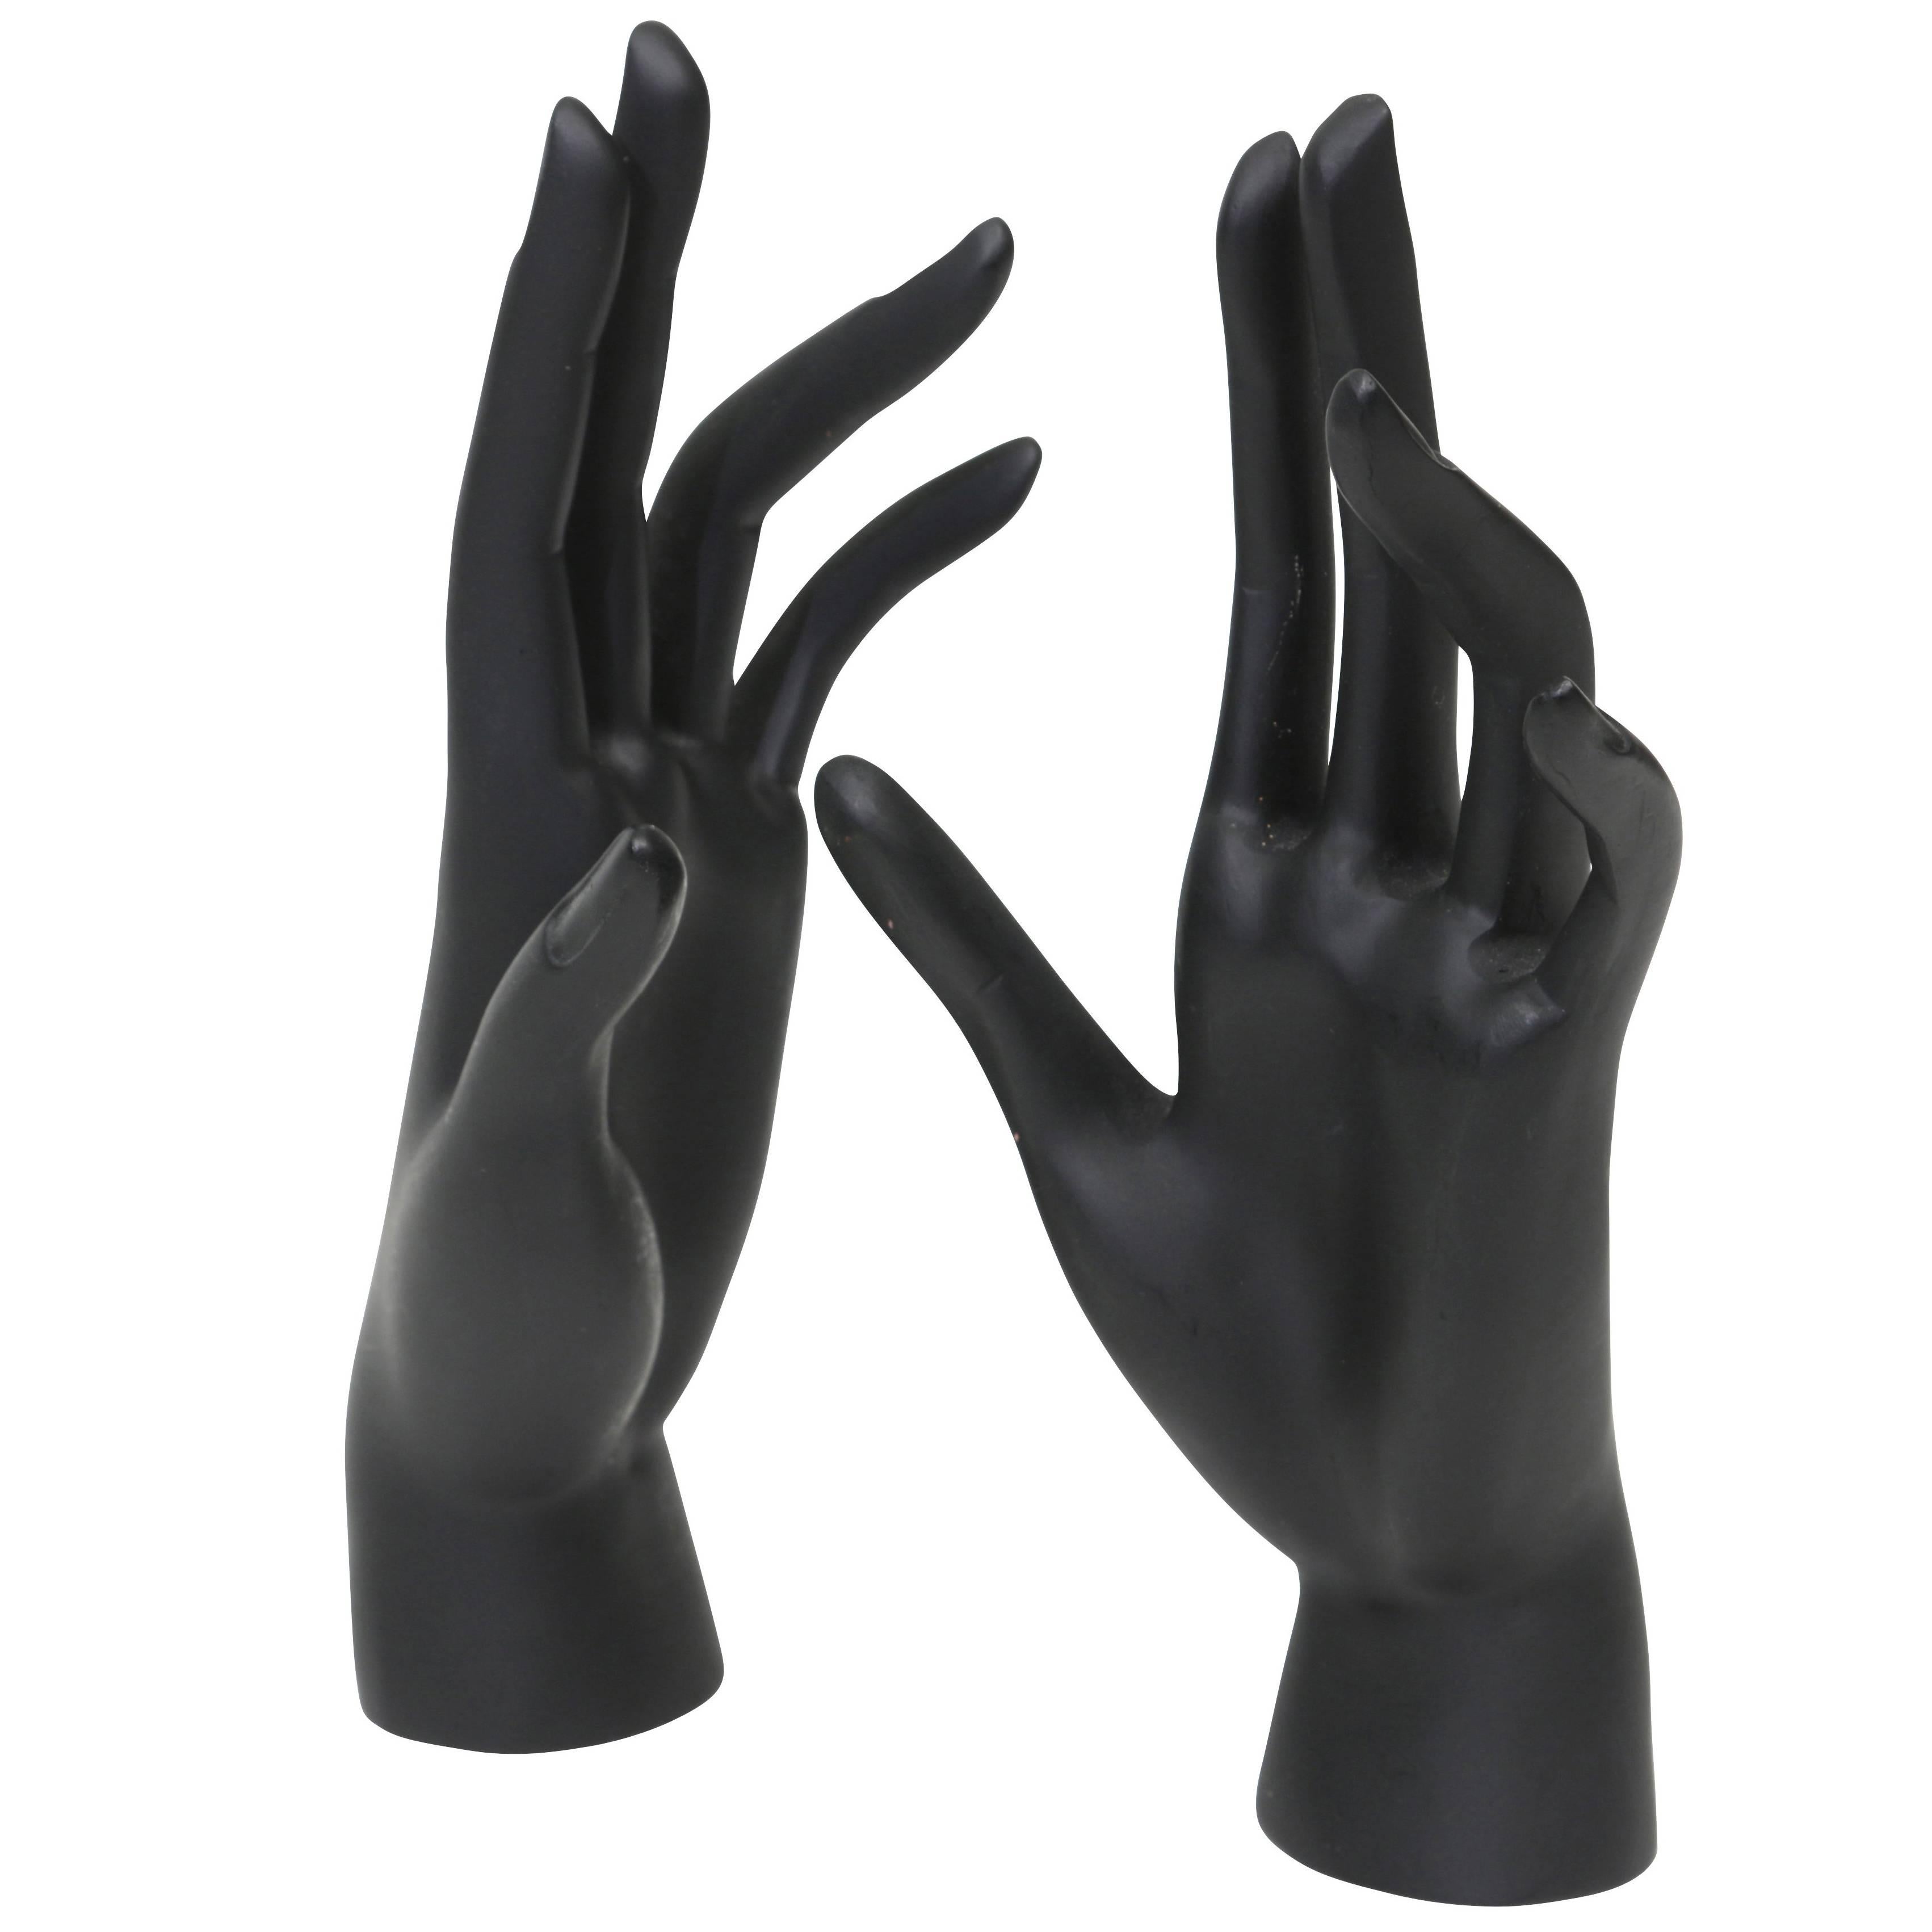 Pair of Cast Resin Mannequin Hands Sculpture